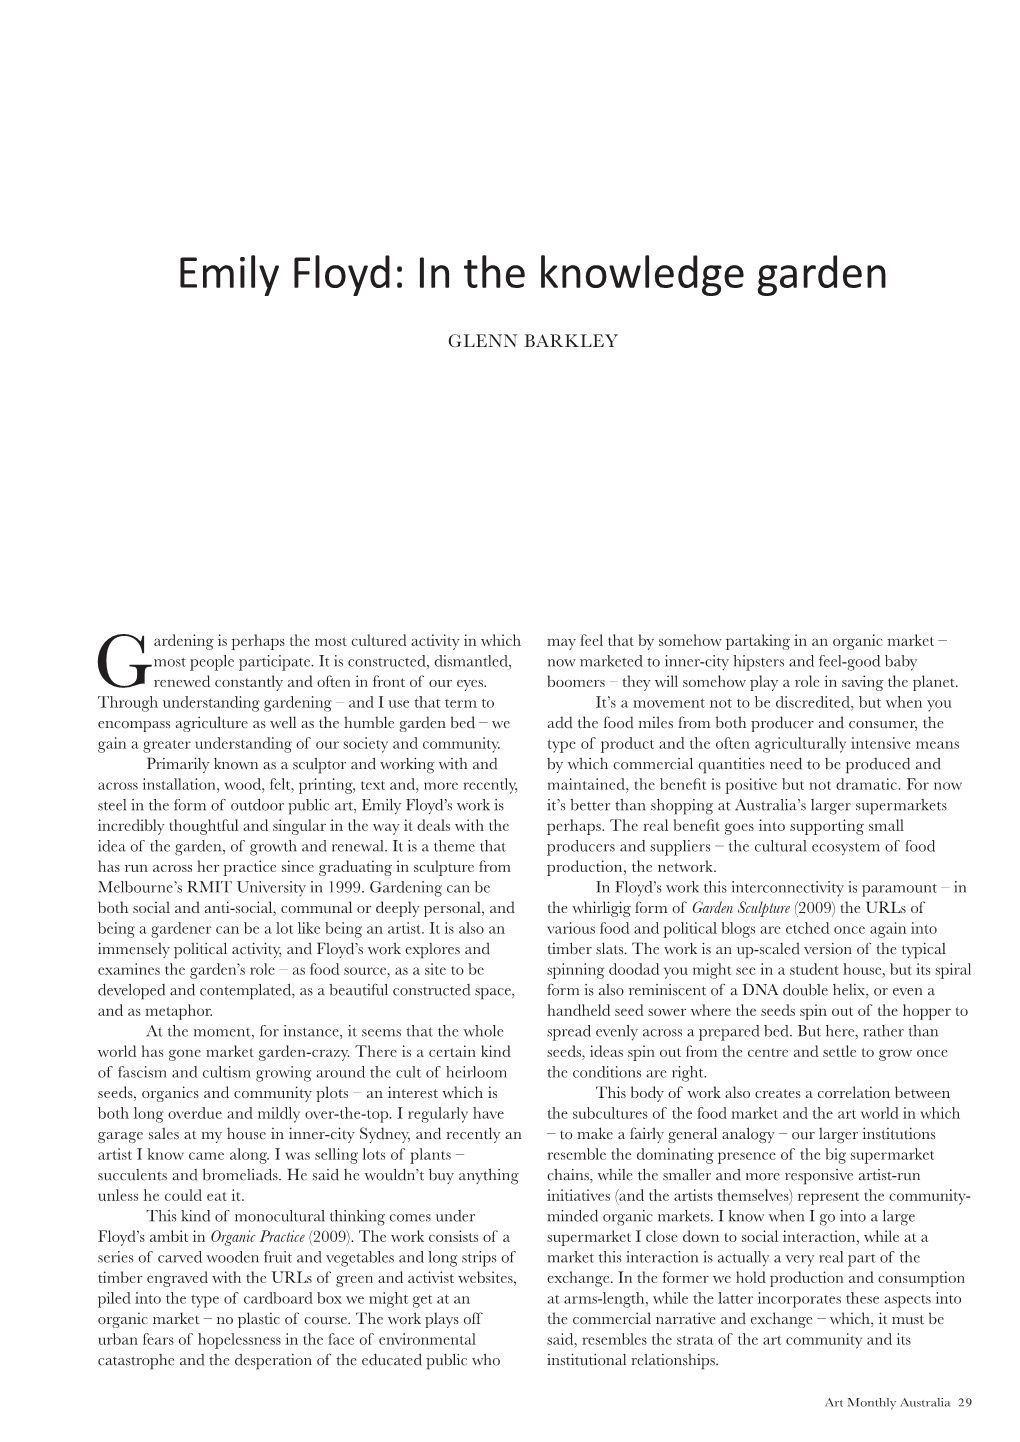 Emily Floyd: in the Knowledge Garden